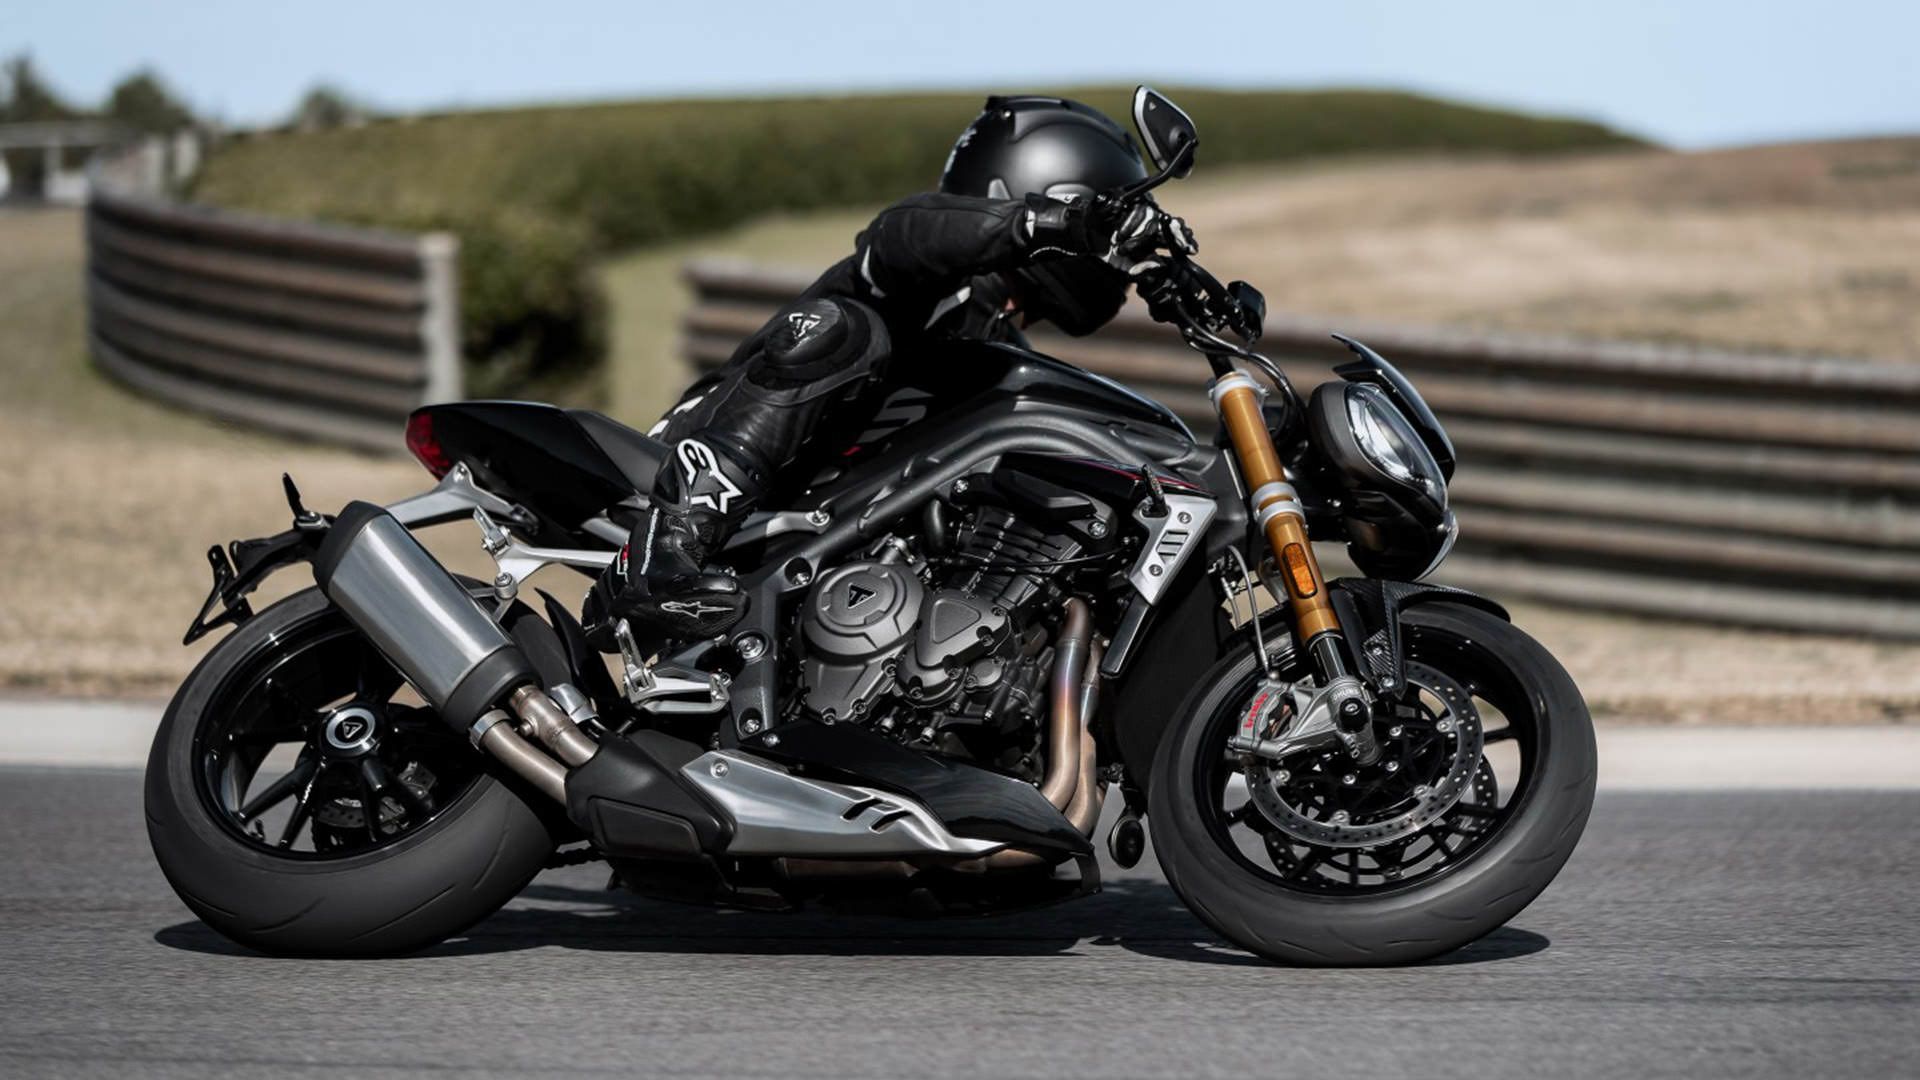 موتورسیکلت تریومف اسپید تریپل 1200 آر اس / Triumph Speed Triple 1200 RS 2021 Motorcycle در پیست